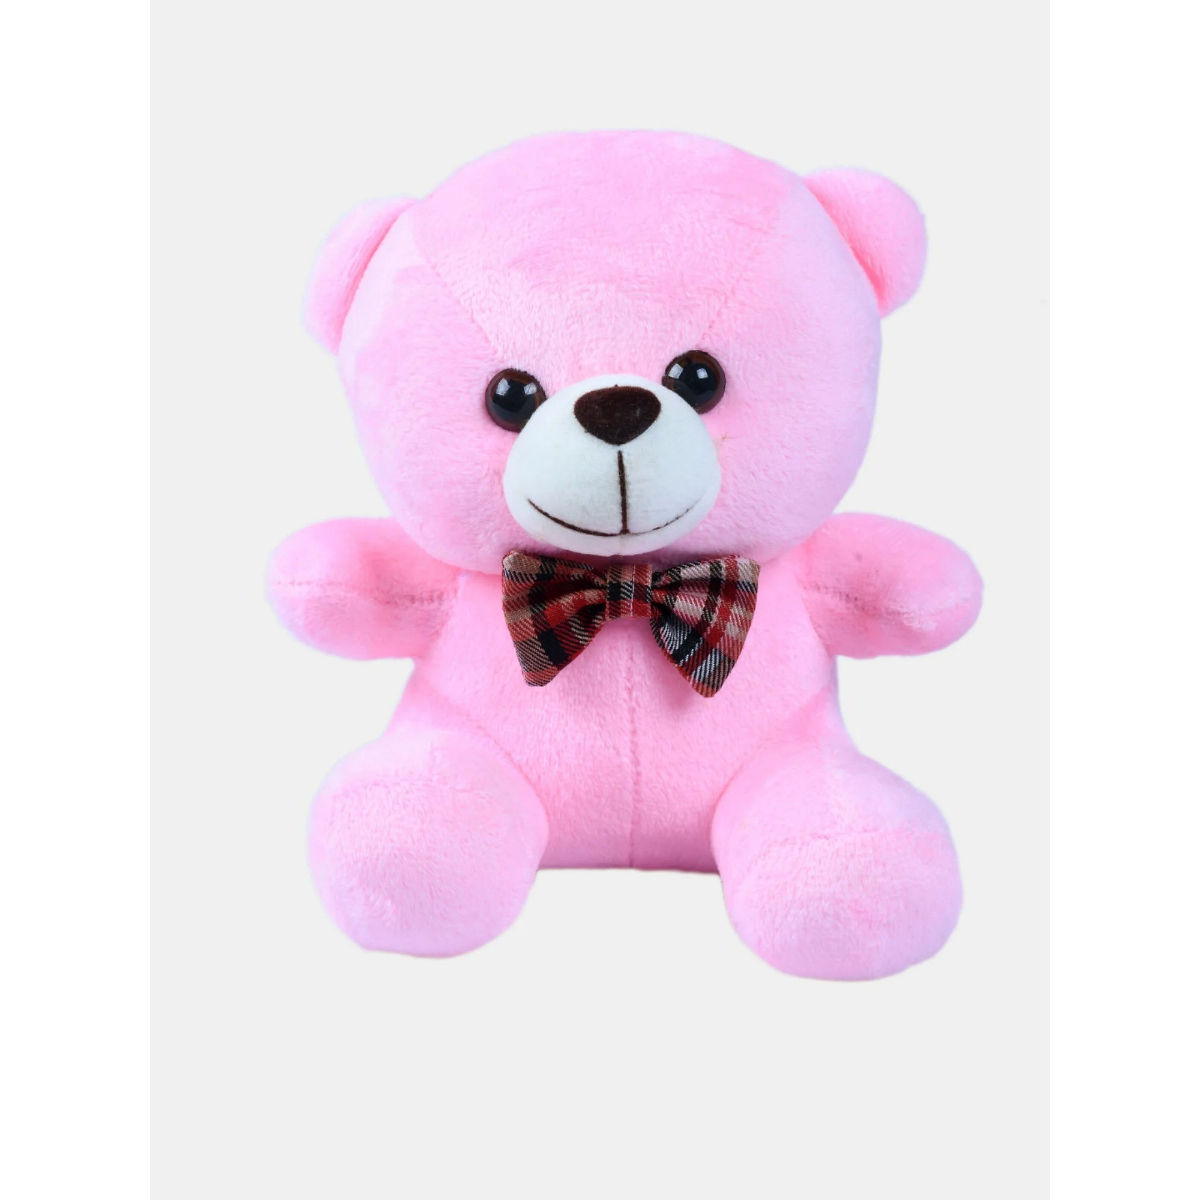 DukieKooky Teddy Bear with Bow Tie: Buy DukieKooky Teddy Bear with ...